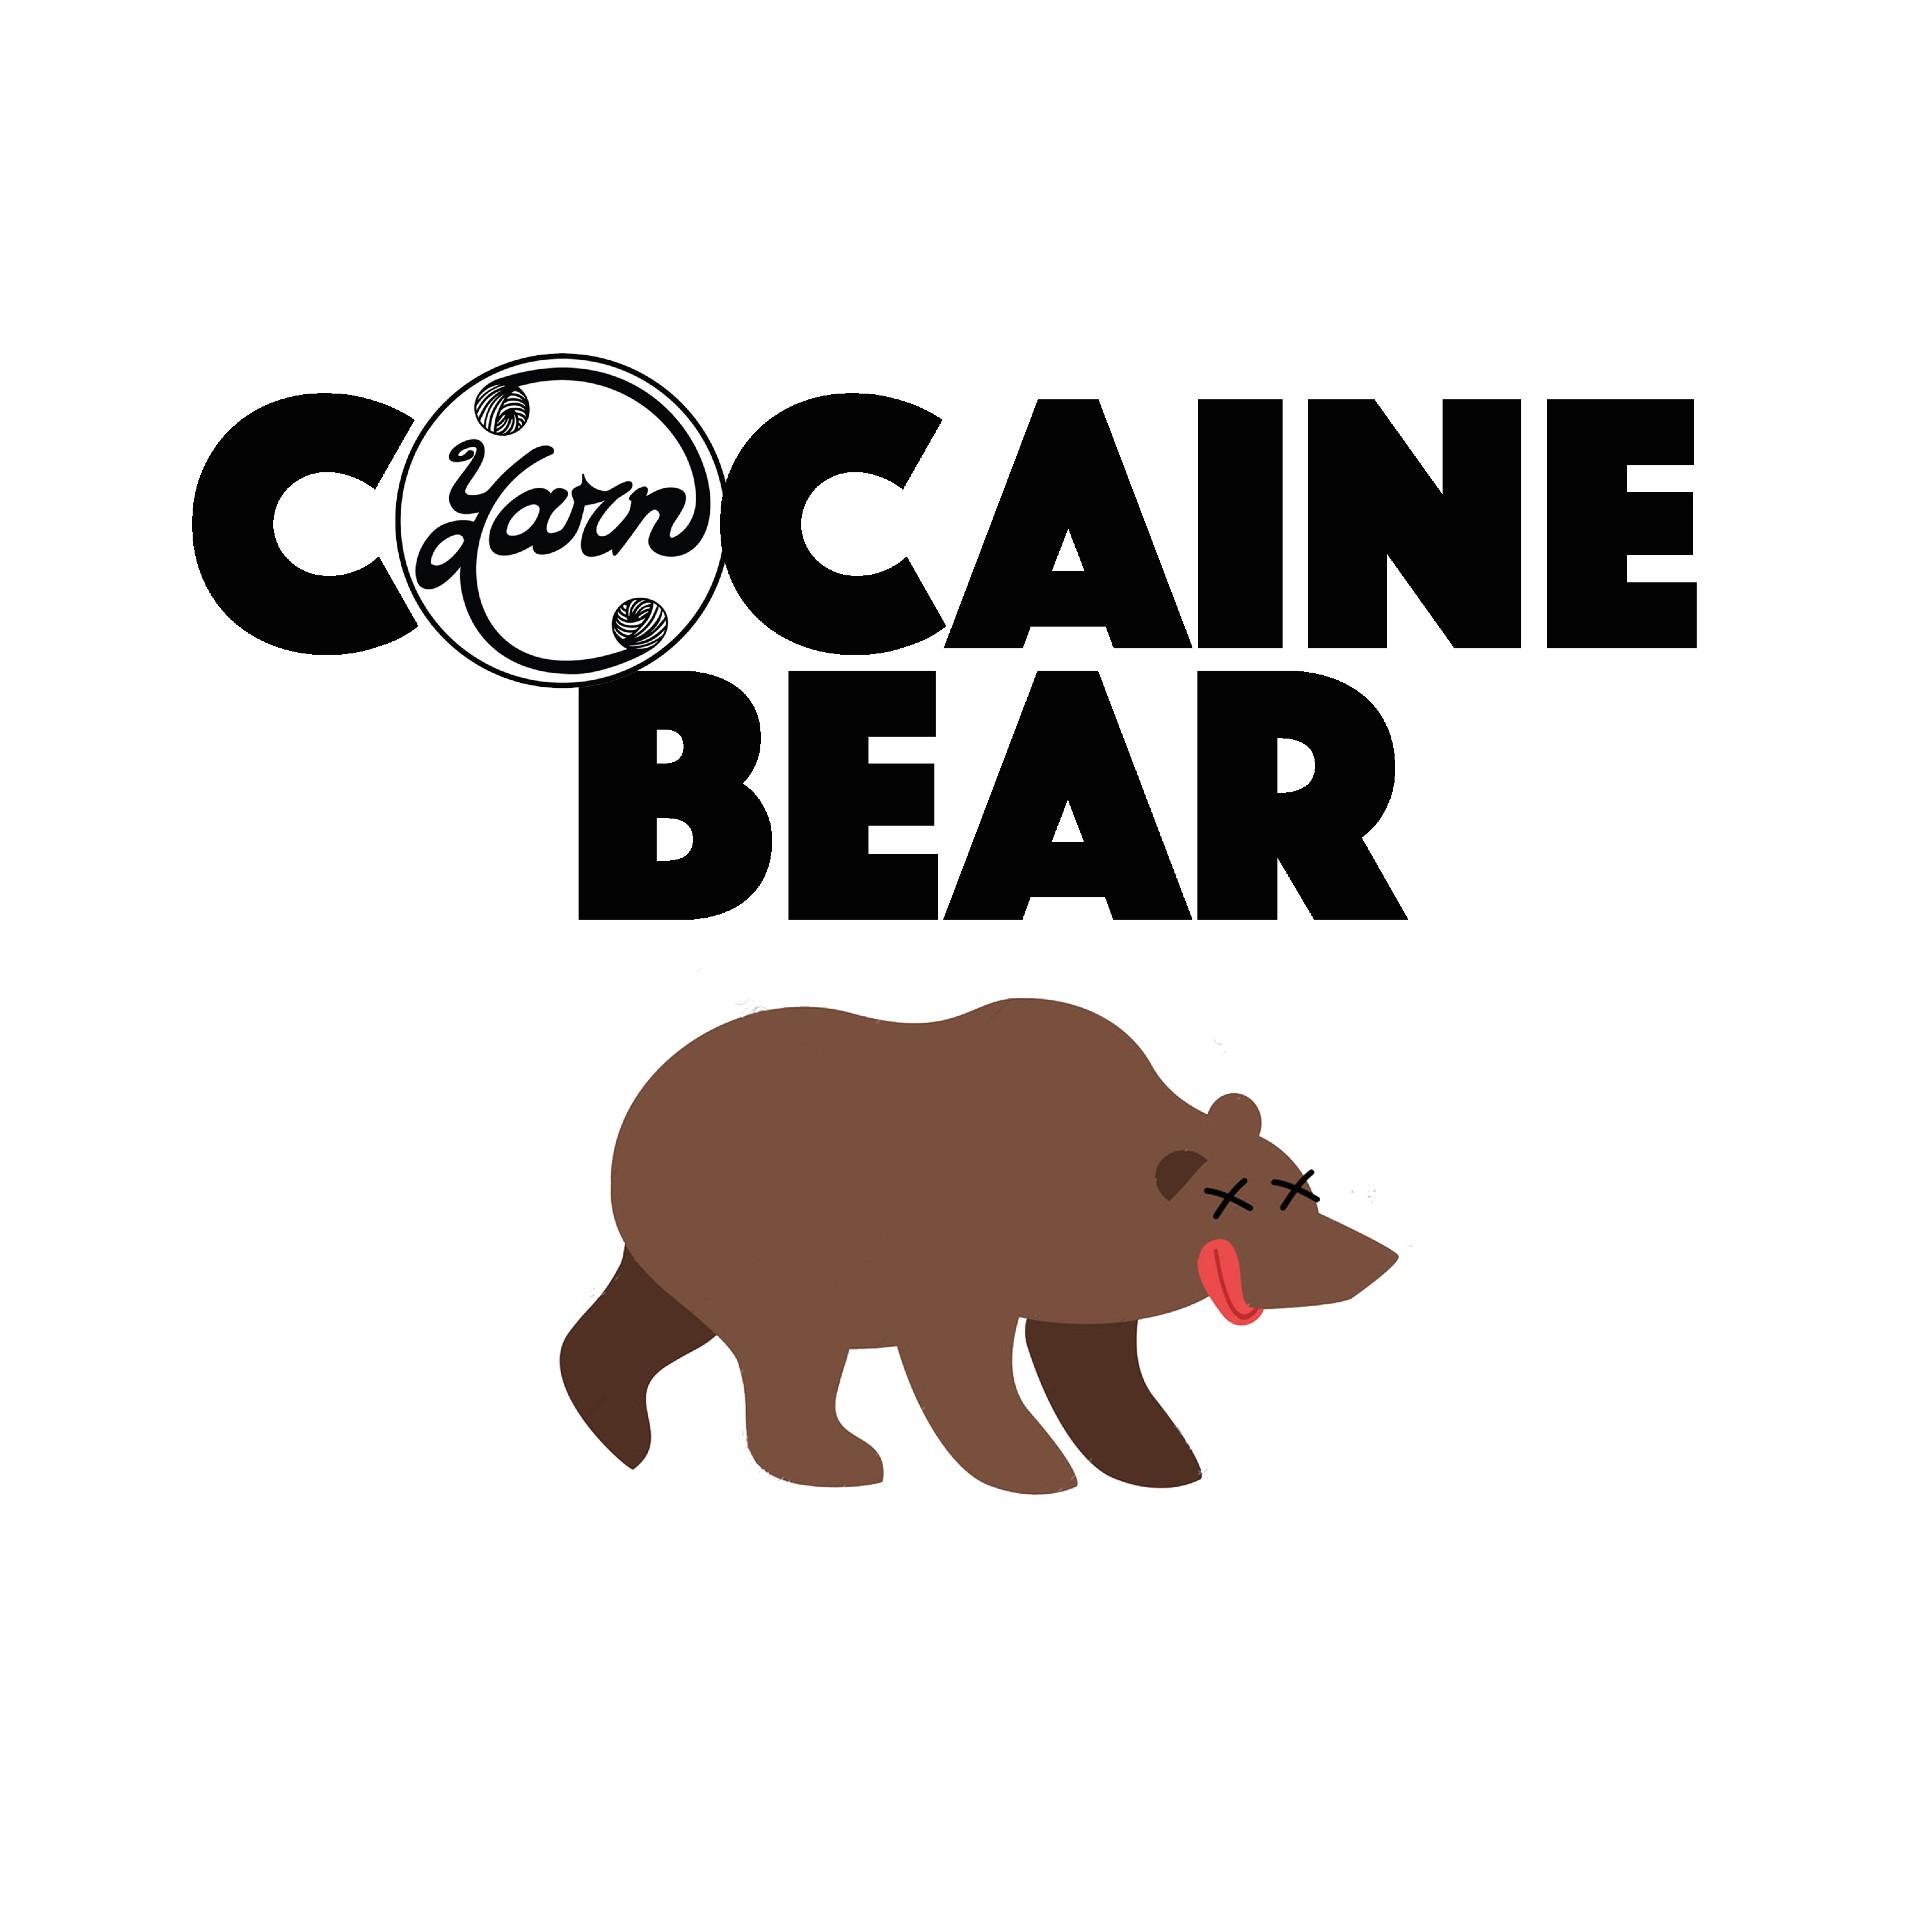 Artwork for the single “Cocaine Bear” by YARN